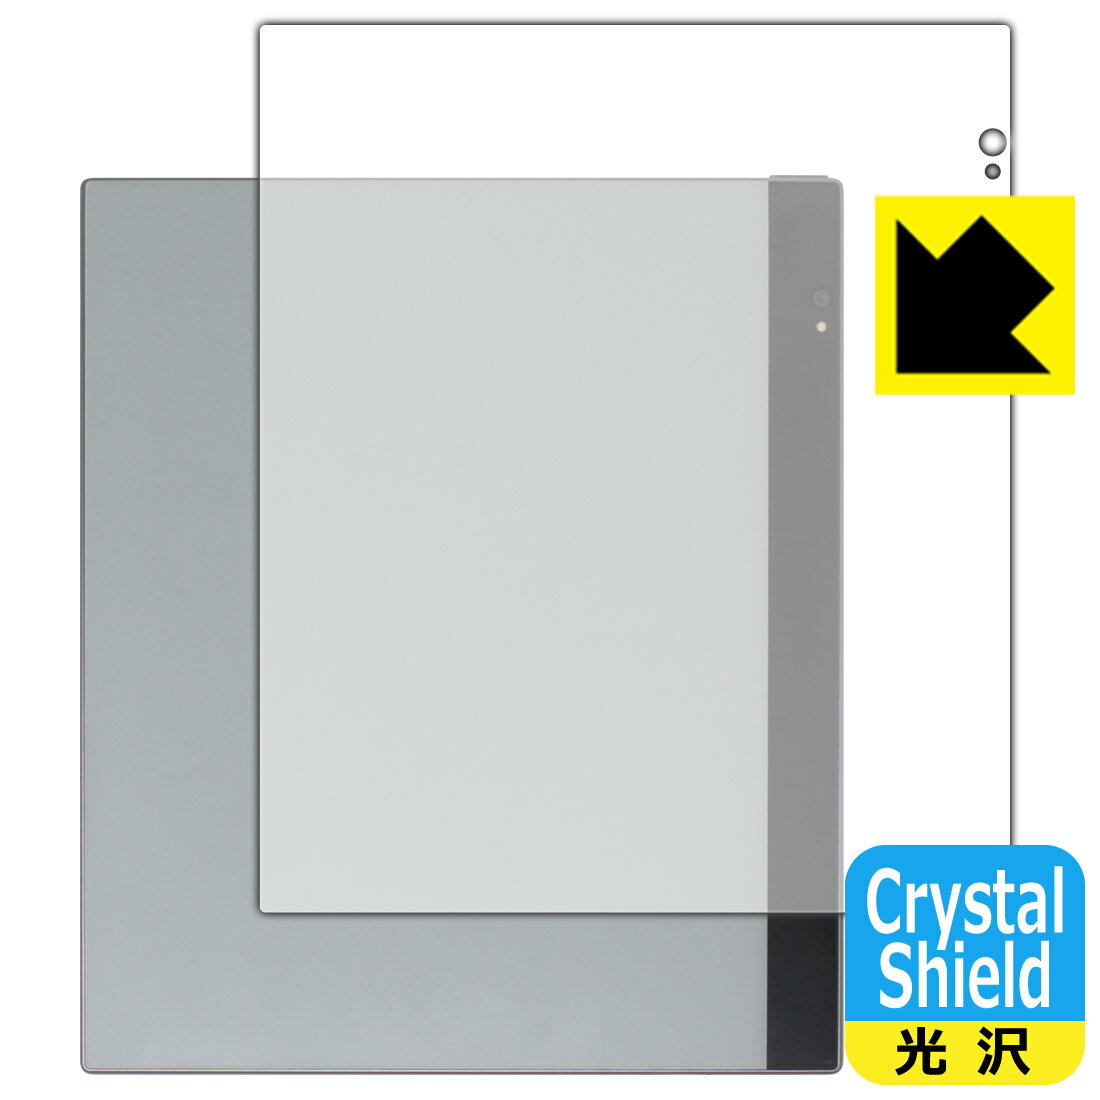 Crystal ShieldyzیtB Bigme inkNote Color (10.3C`) wʗp (3Zbg) { А